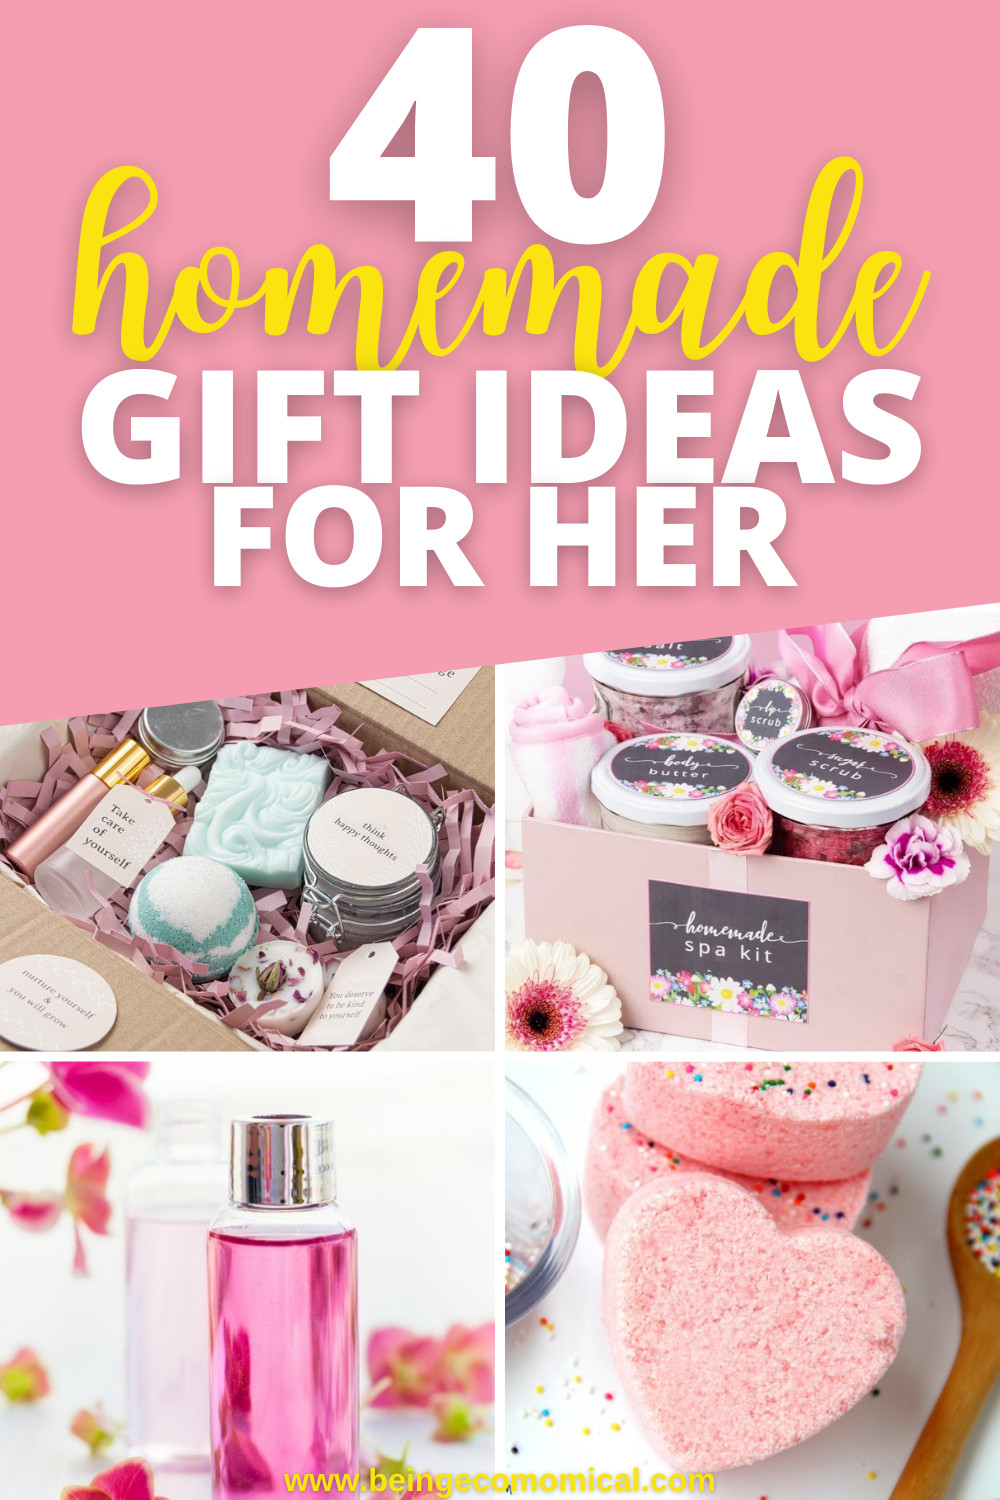 Homemade Valentine Gift Ideas For Her
 40 Homemade DIY Gift Ideas For Her in 2021